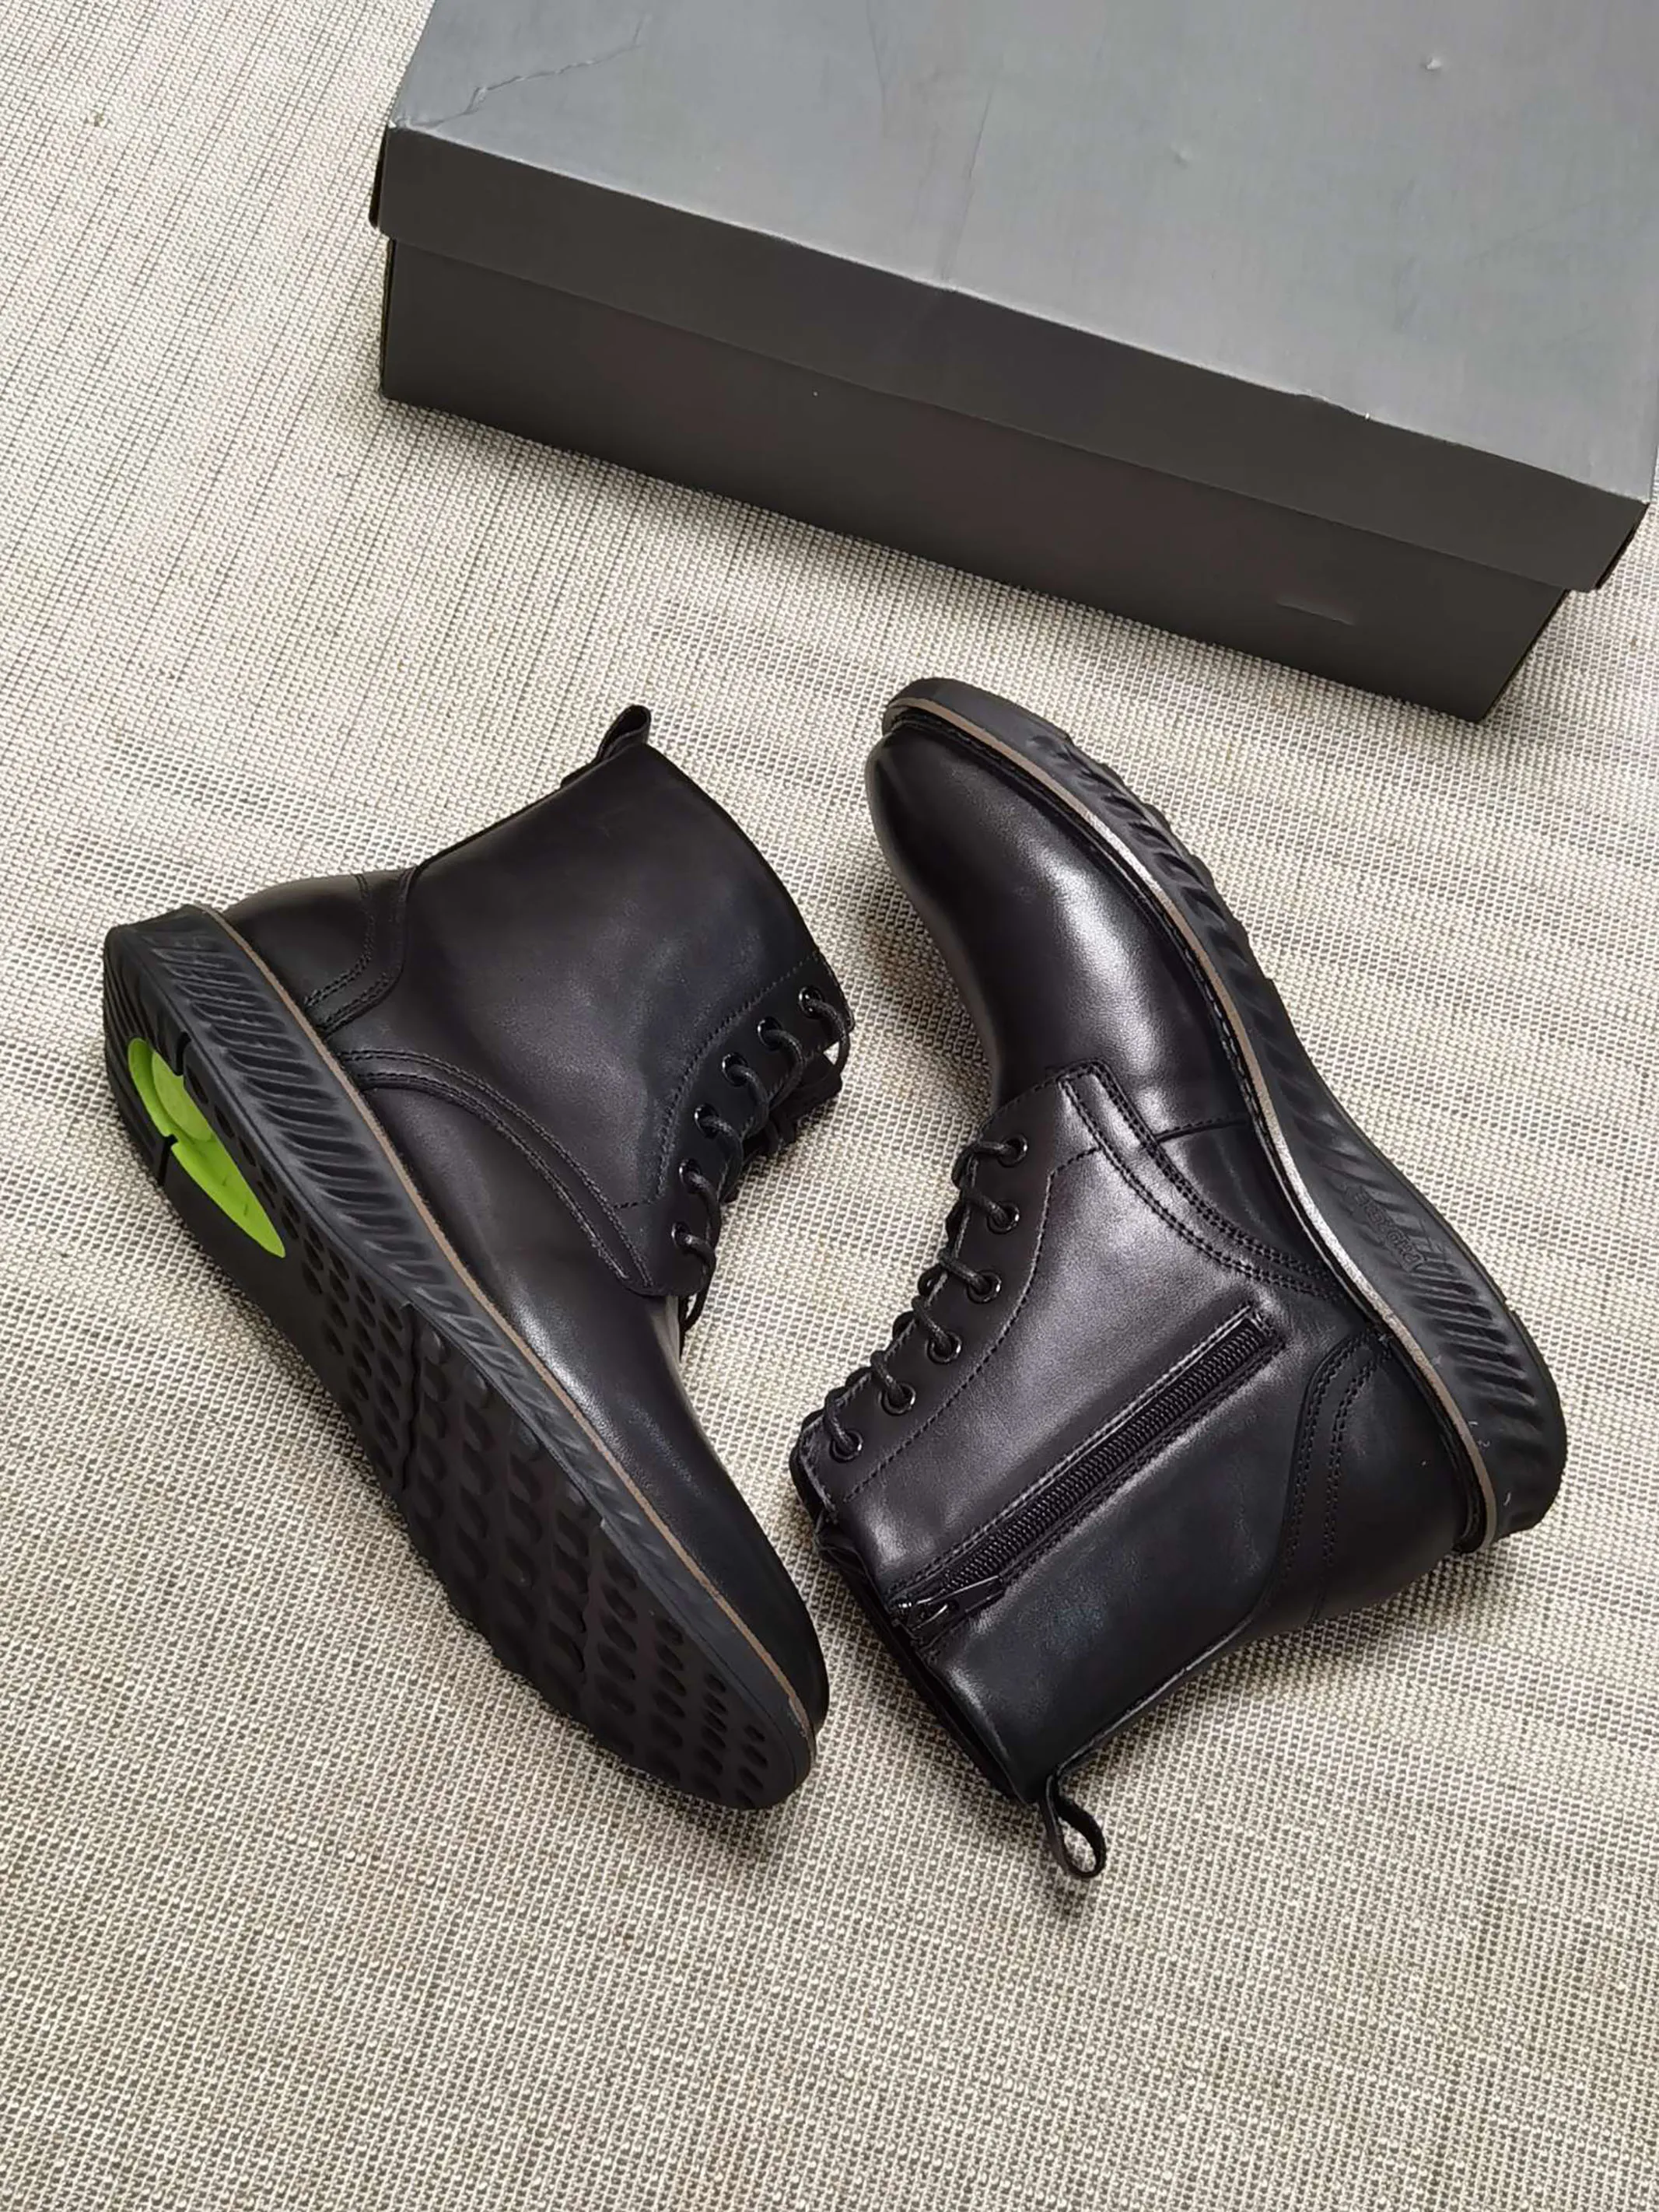 Designer Winter boots Classic black Martin British style Fashion side zipper oil wax leather waterproof dust cushioning Casual men